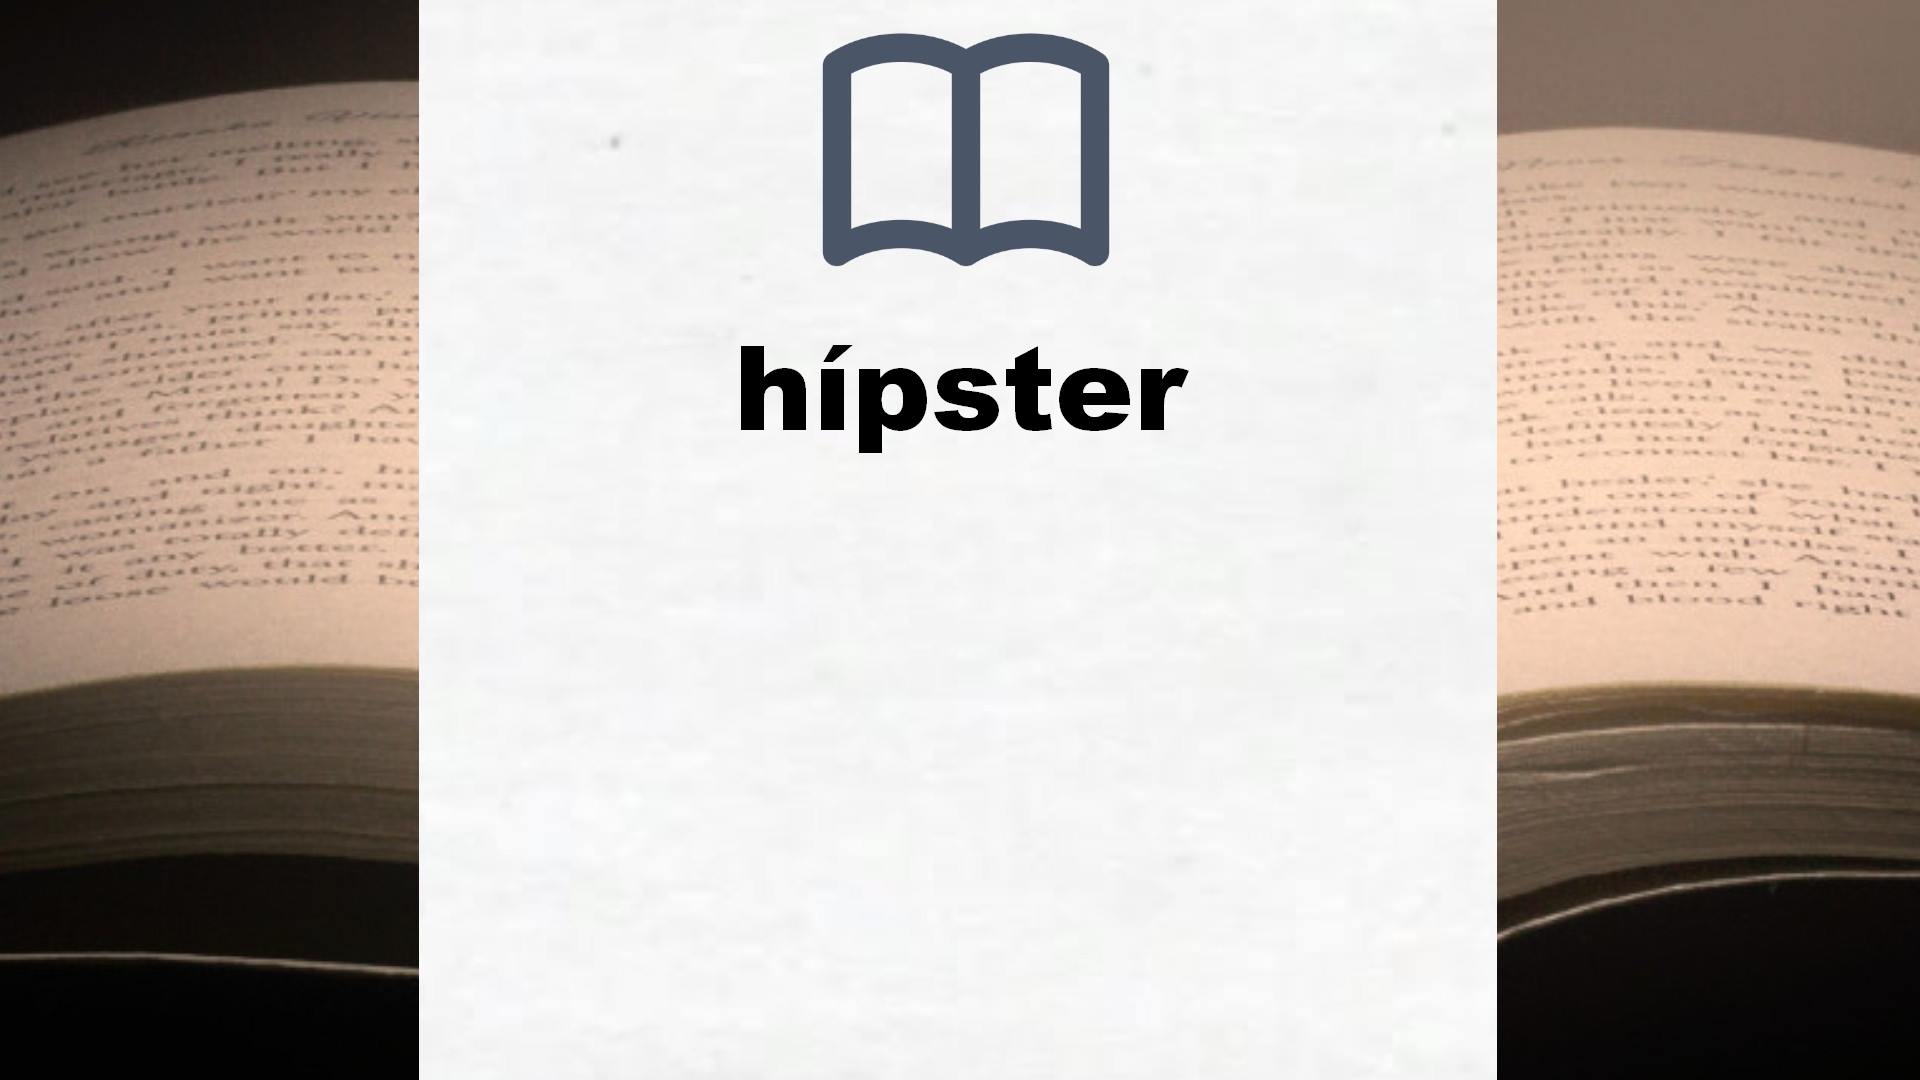 Libros sobre hípster